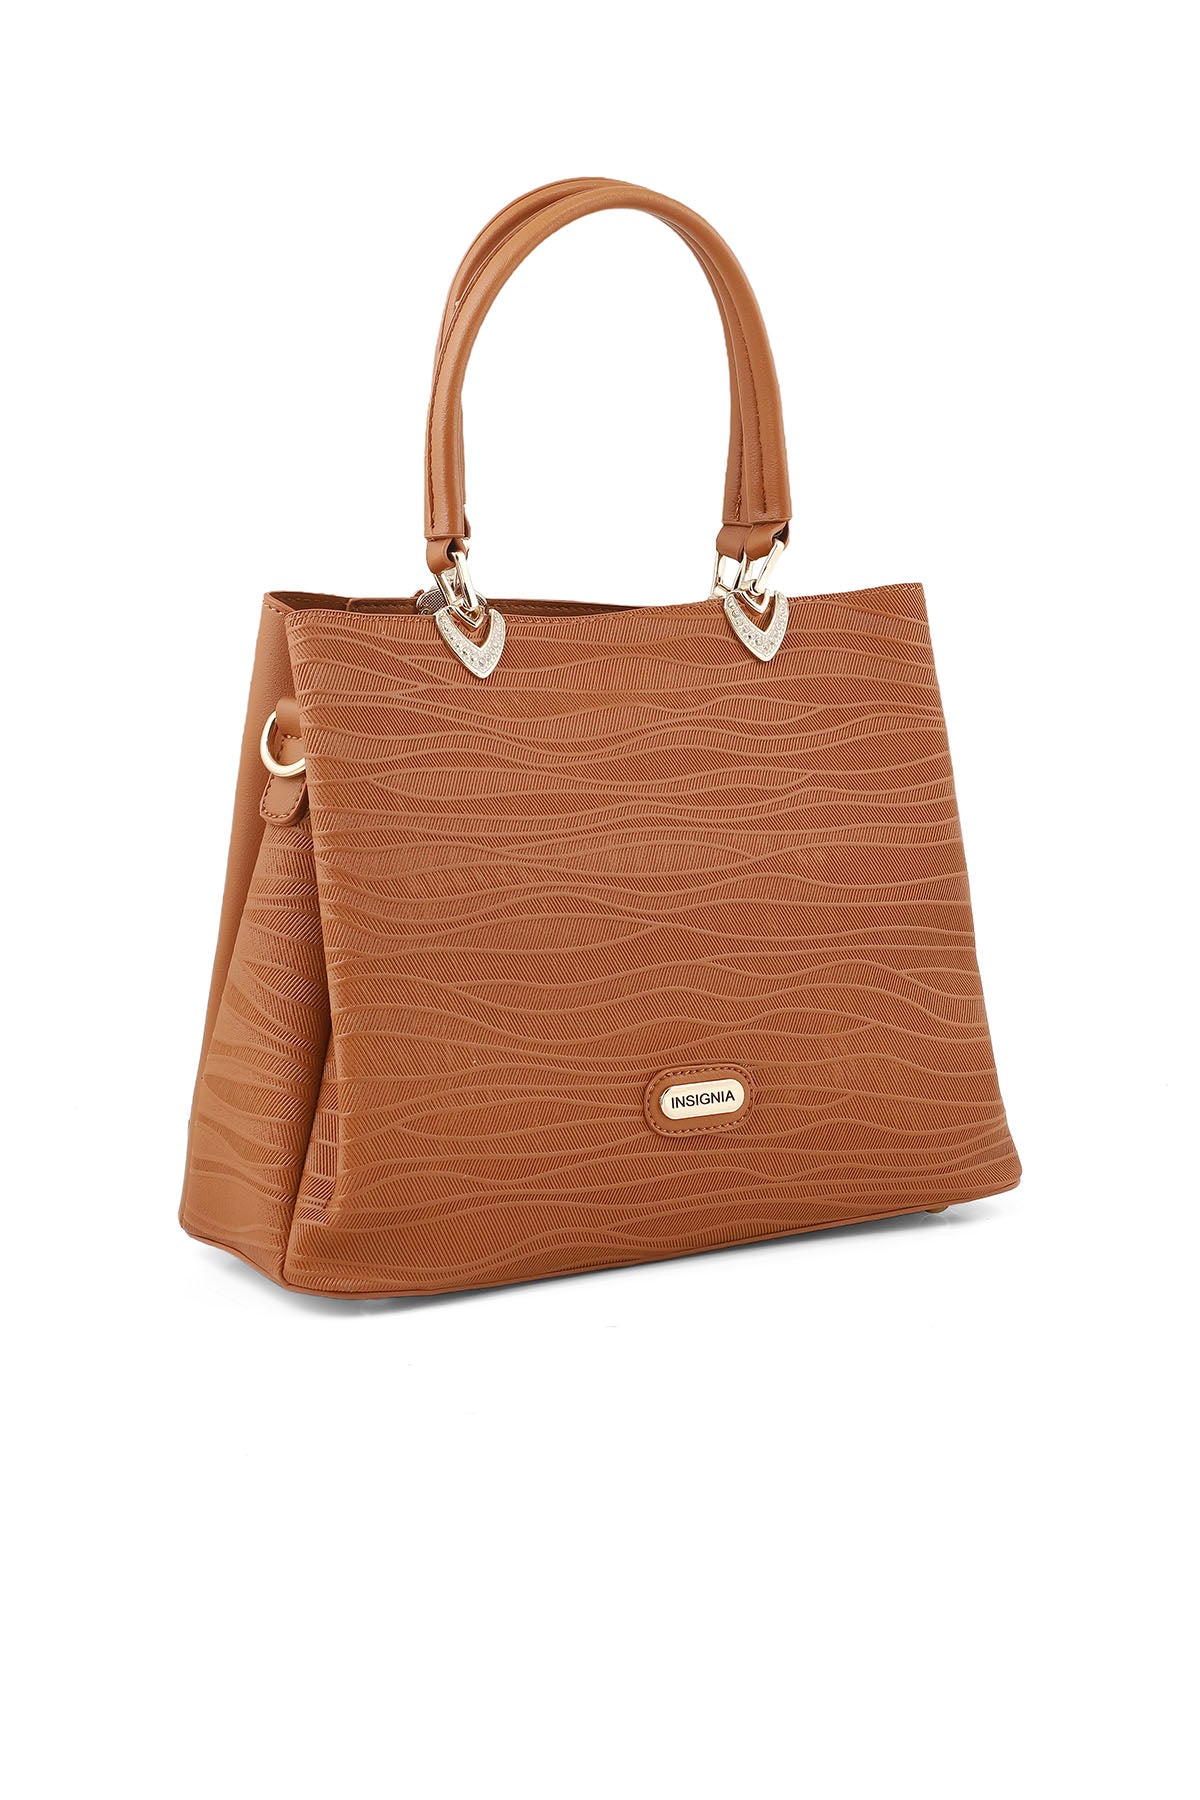 Formal Tote Hand Bags B15052-Brown